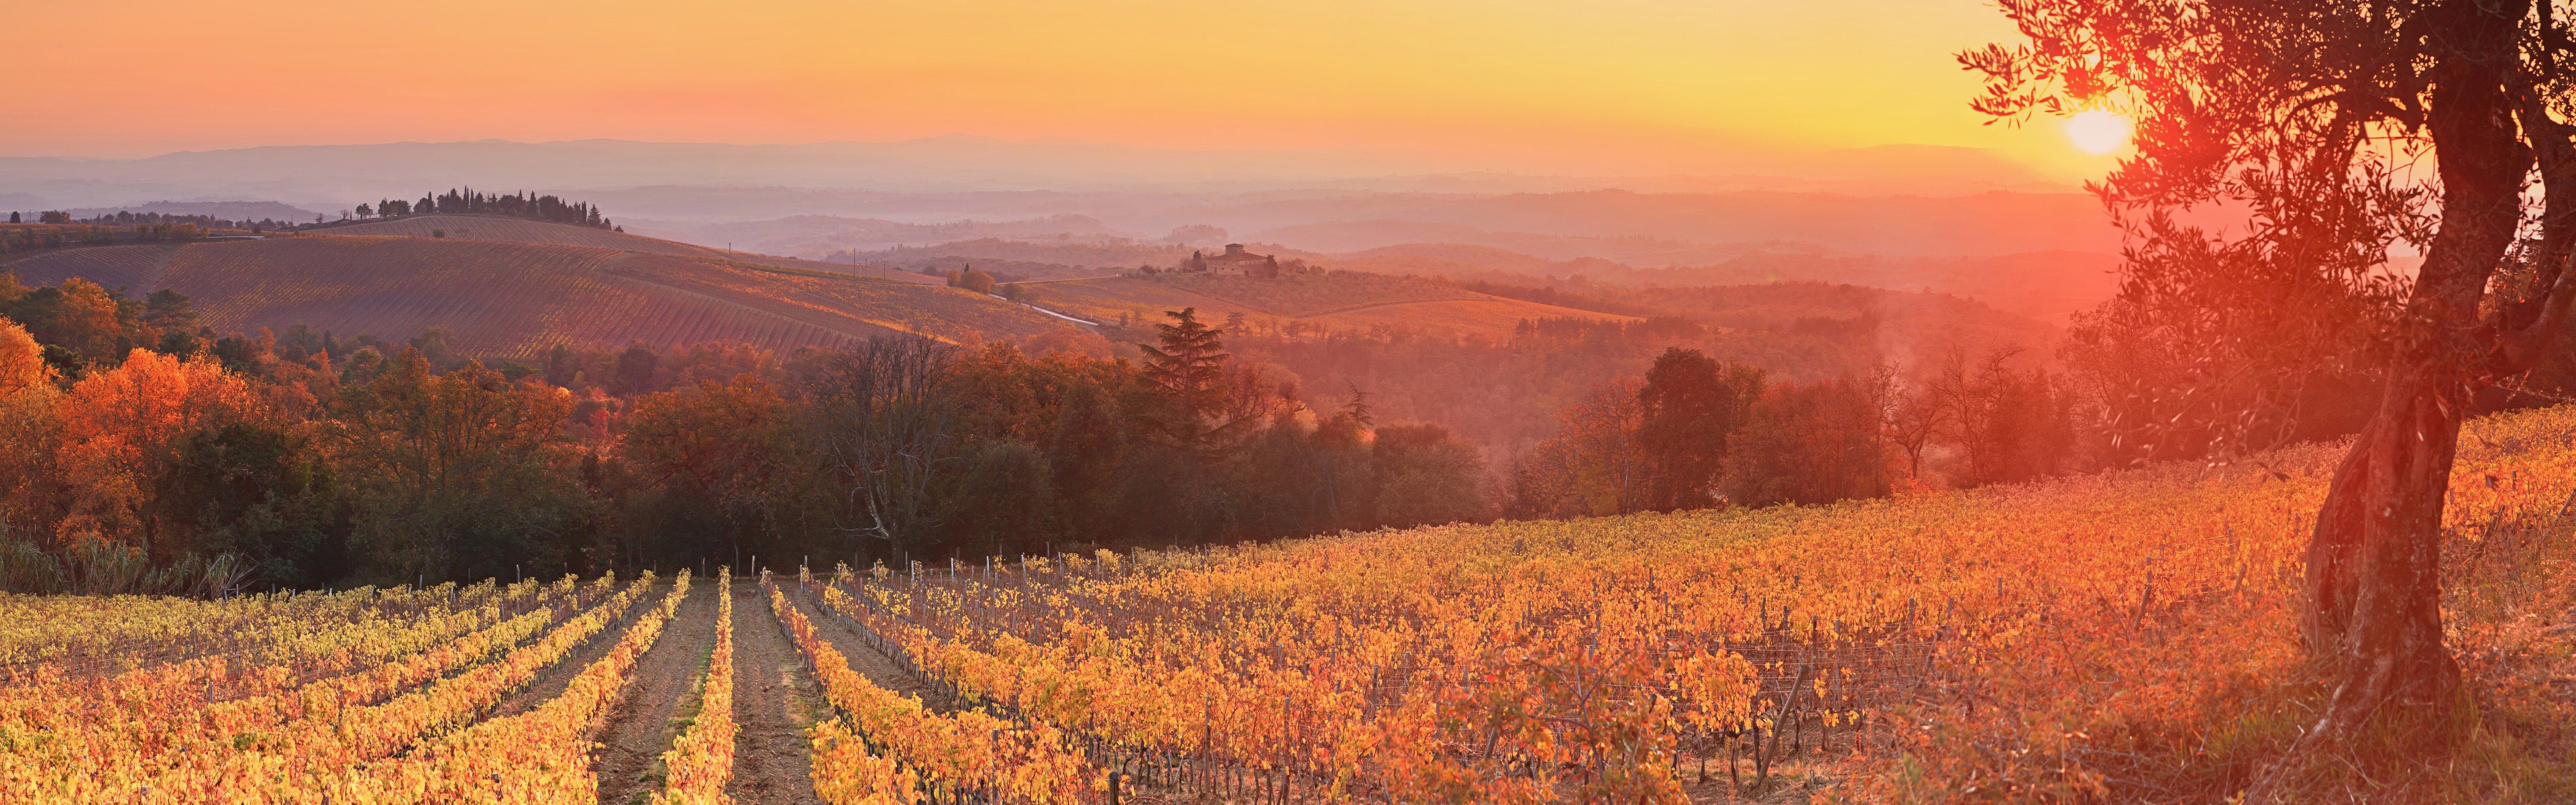 Vineyard Sunset Siena Tuscany Italy Wallpaper in jpg format